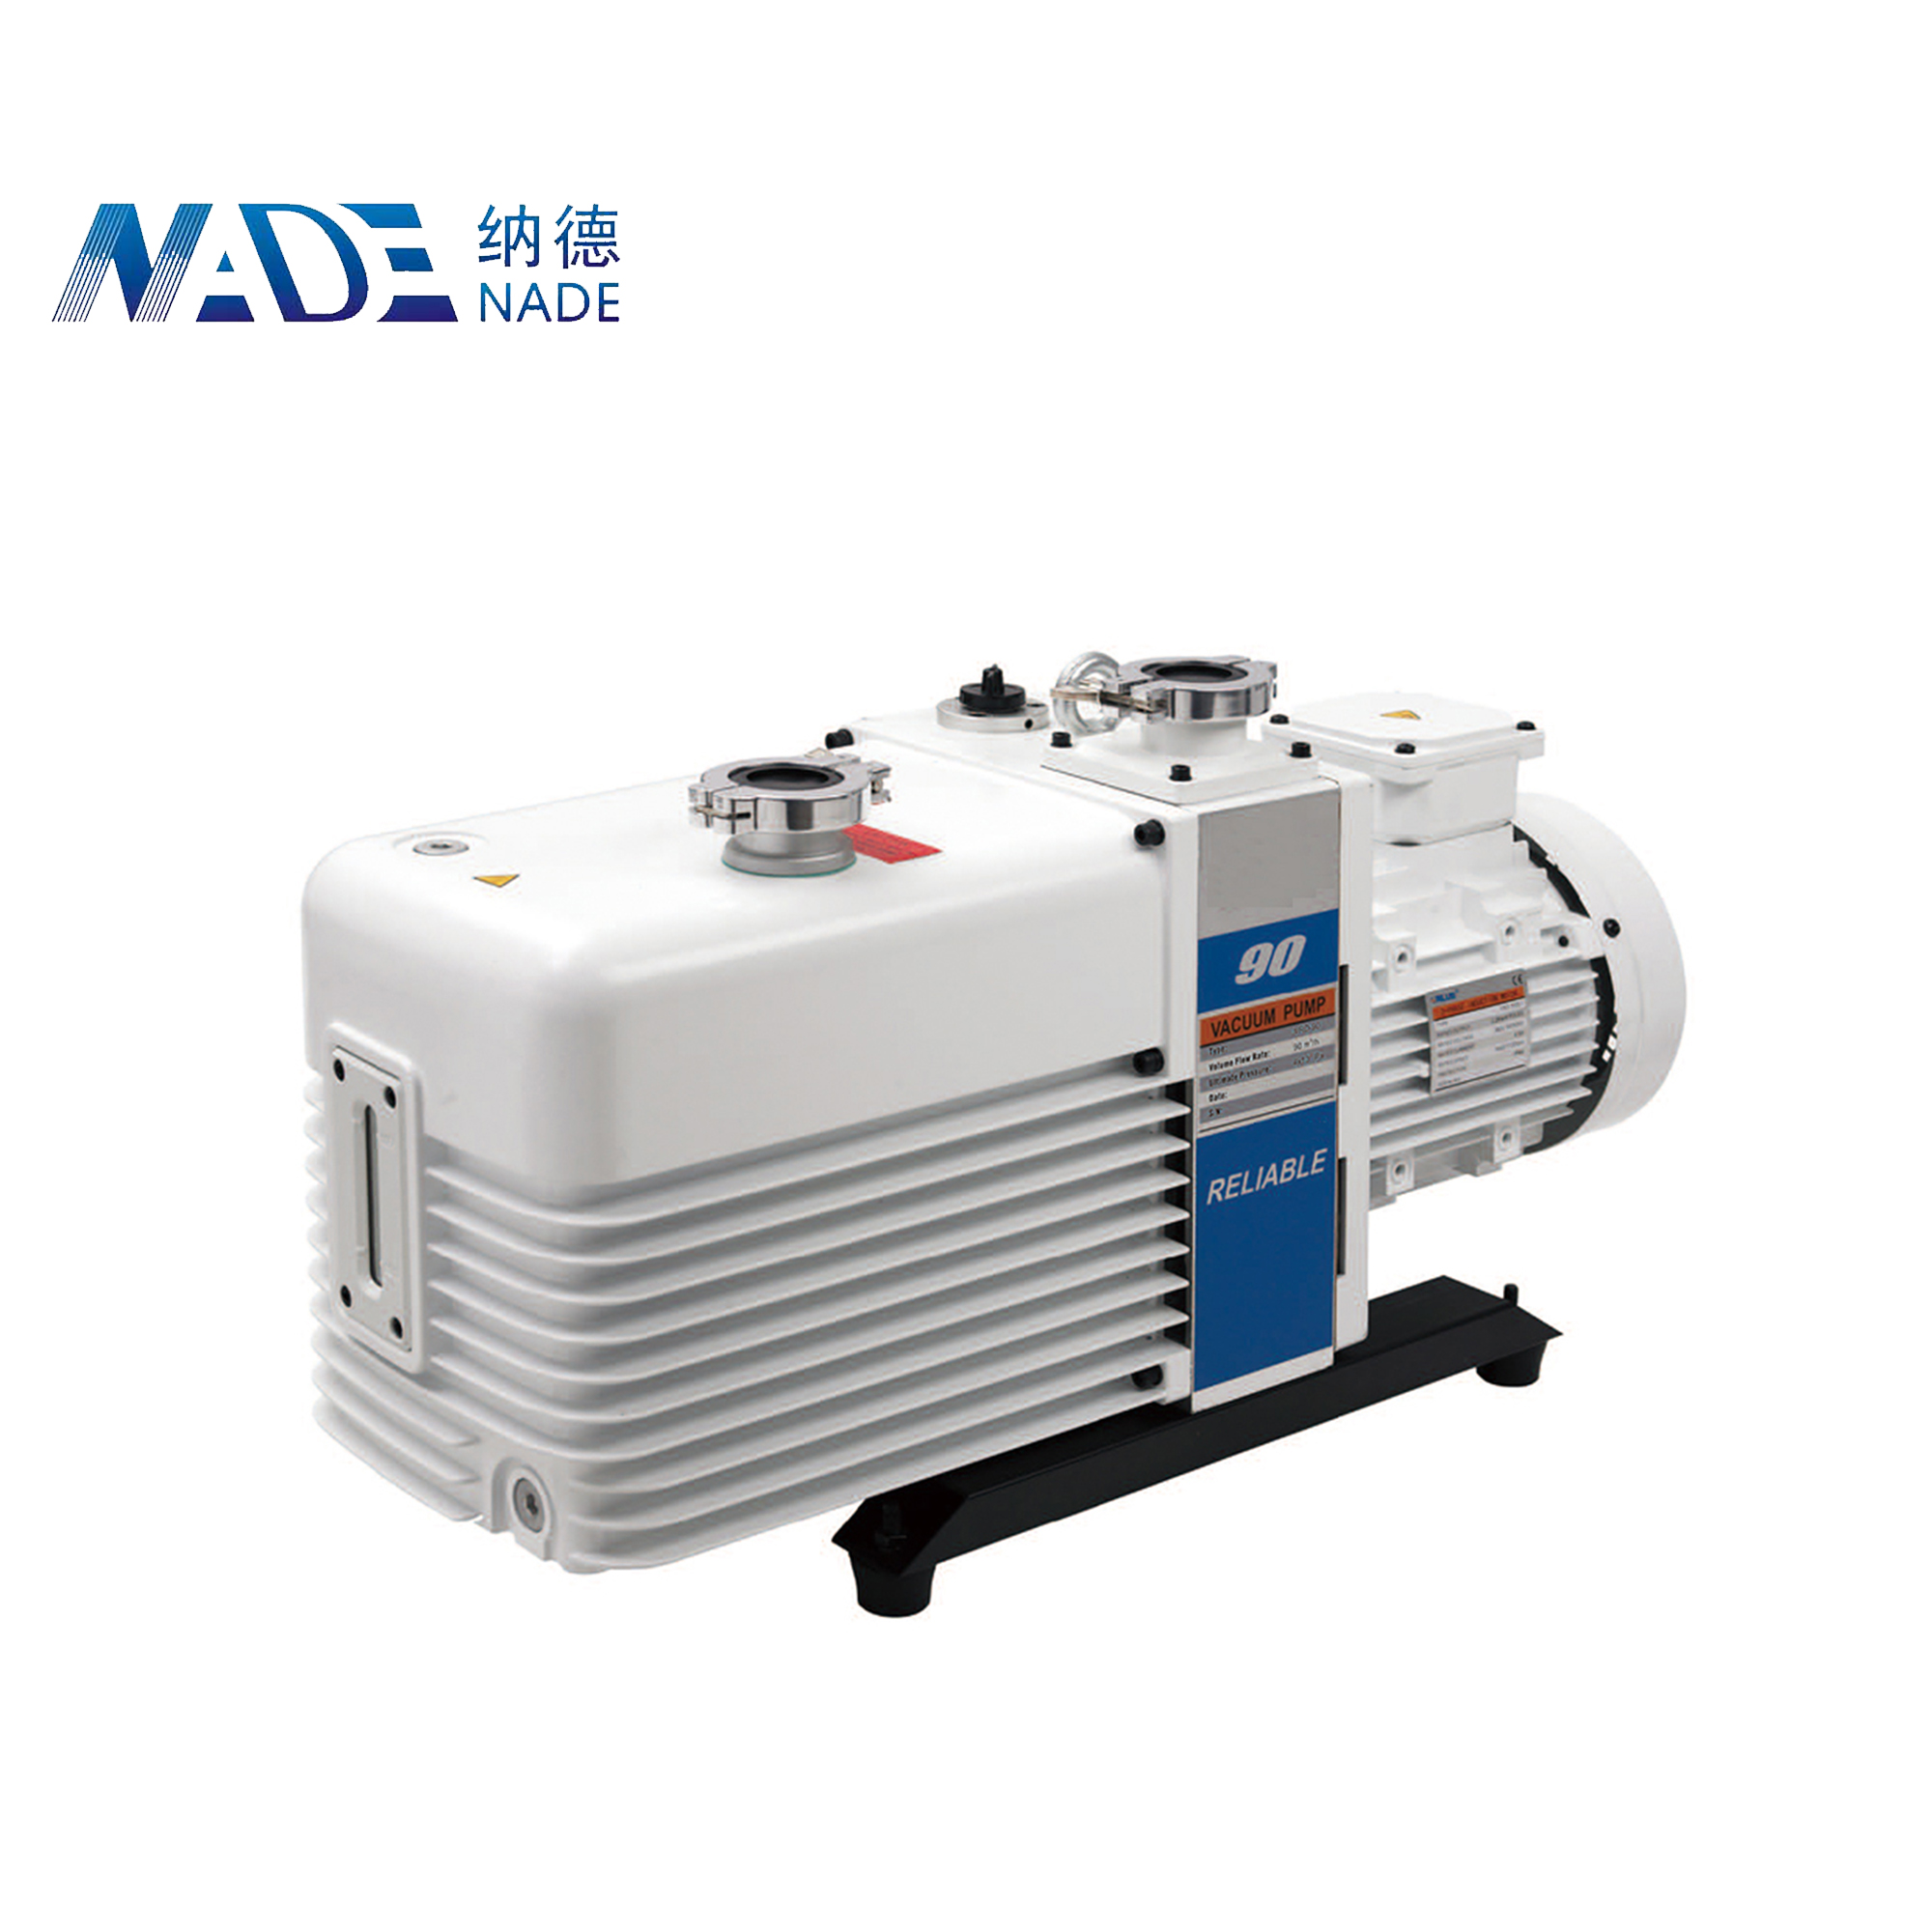 NADE VRD-90 VRD Series Perfect Performance Tow-Shift adjustable gas ballast valve satisfies VRD Series Bipolar vacuum pump